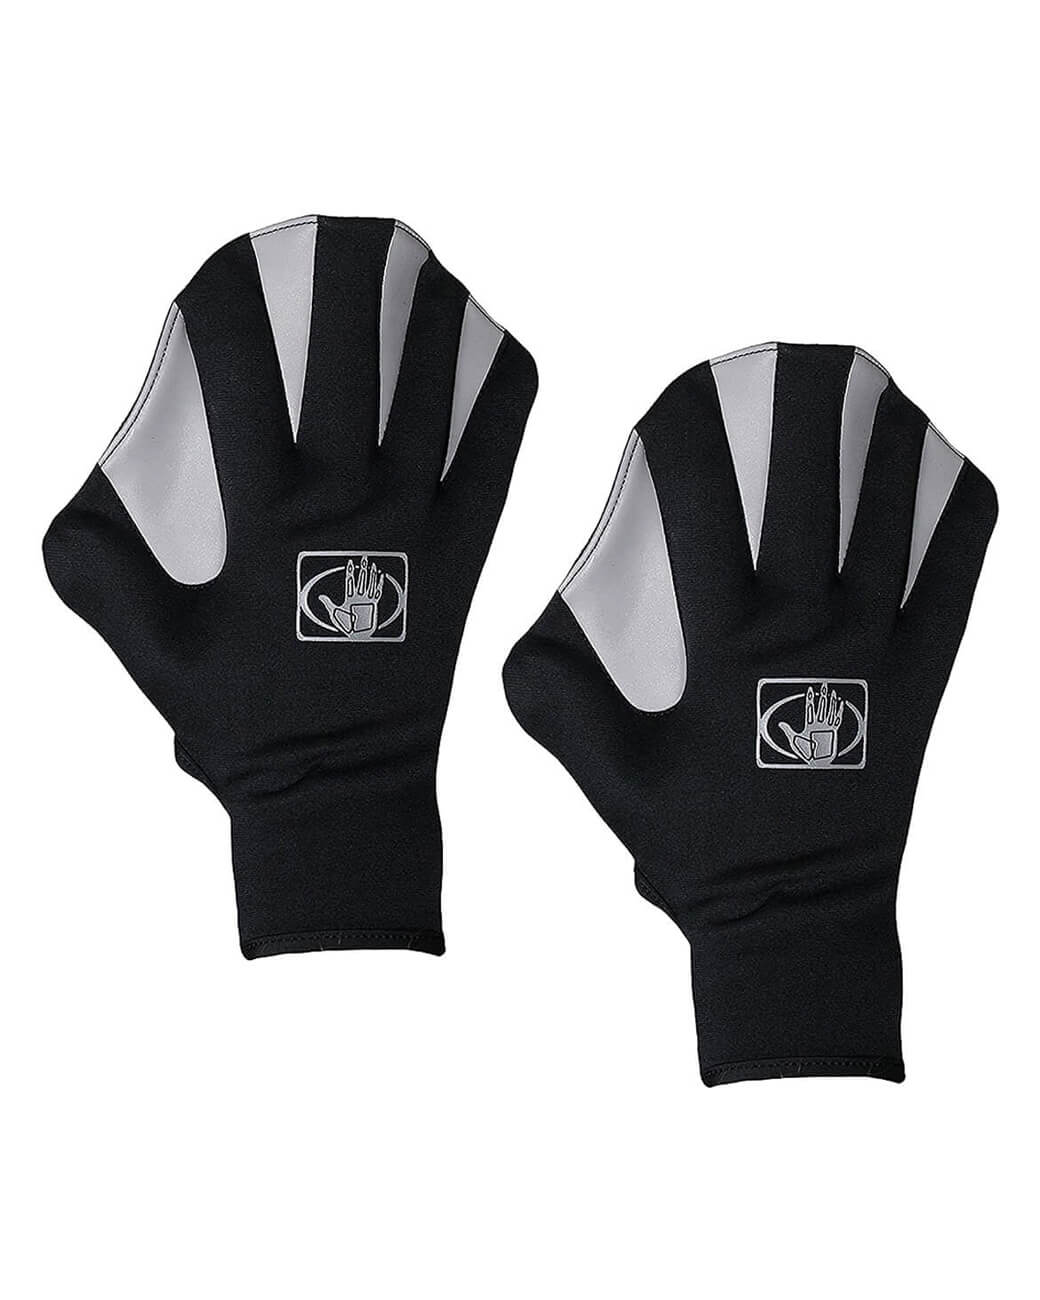 Body Glove POWER PADDLE Gloves